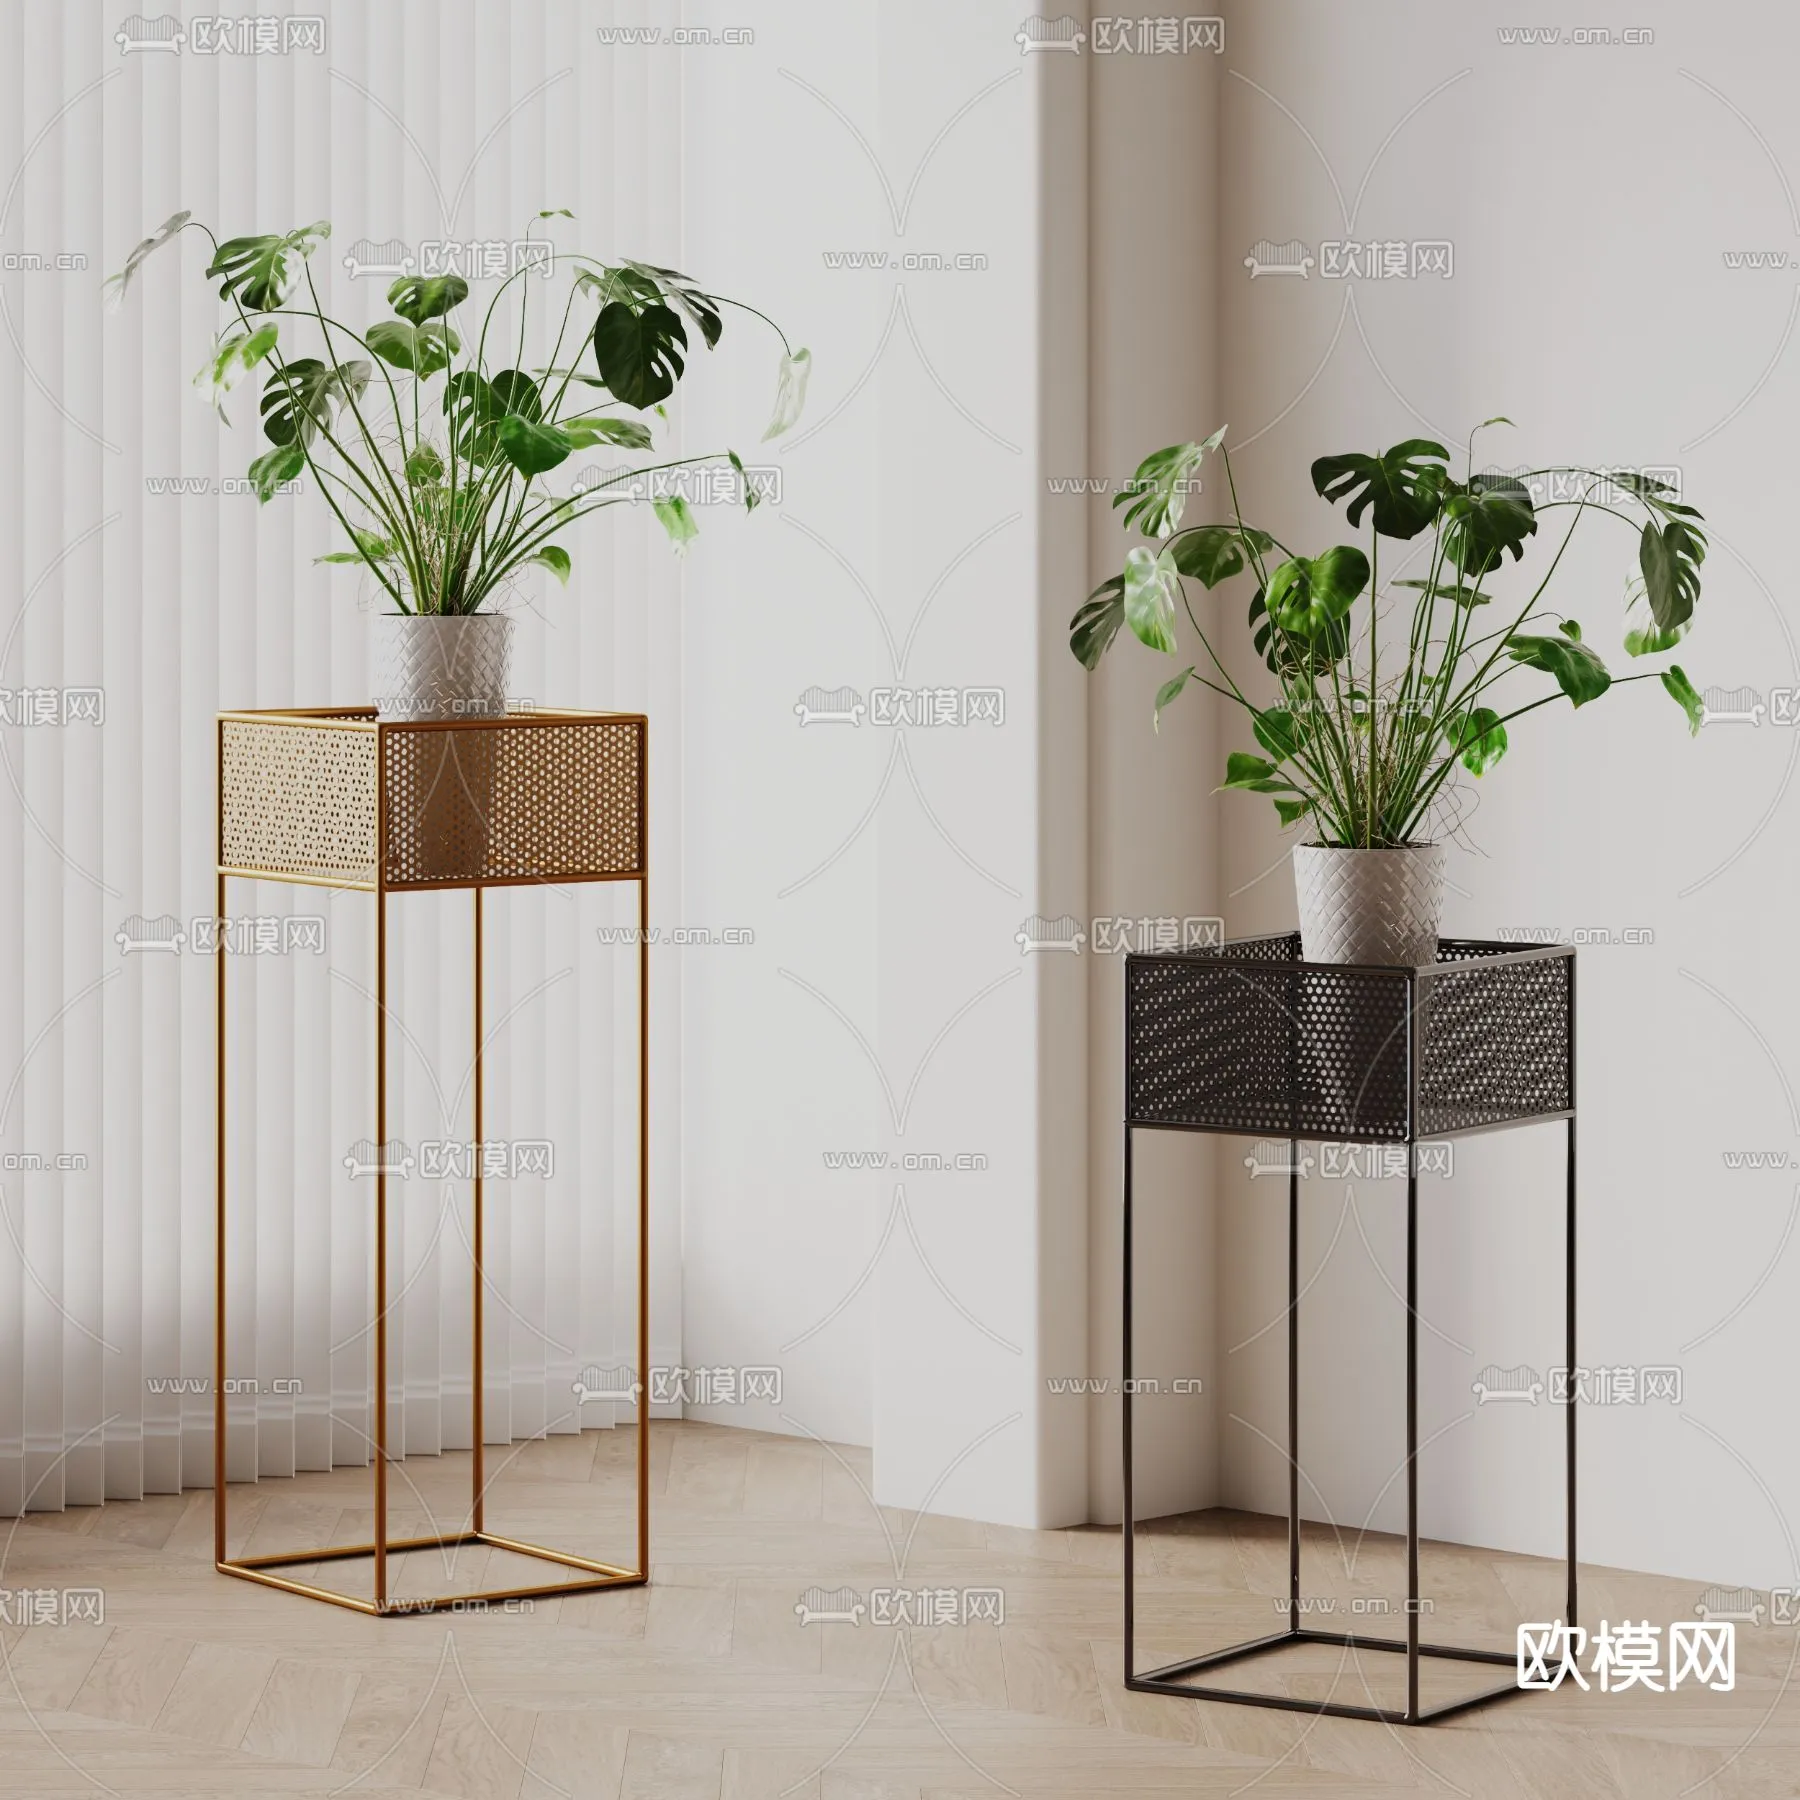 Plant – VRAY / CORONA – 3D MODEL – 420